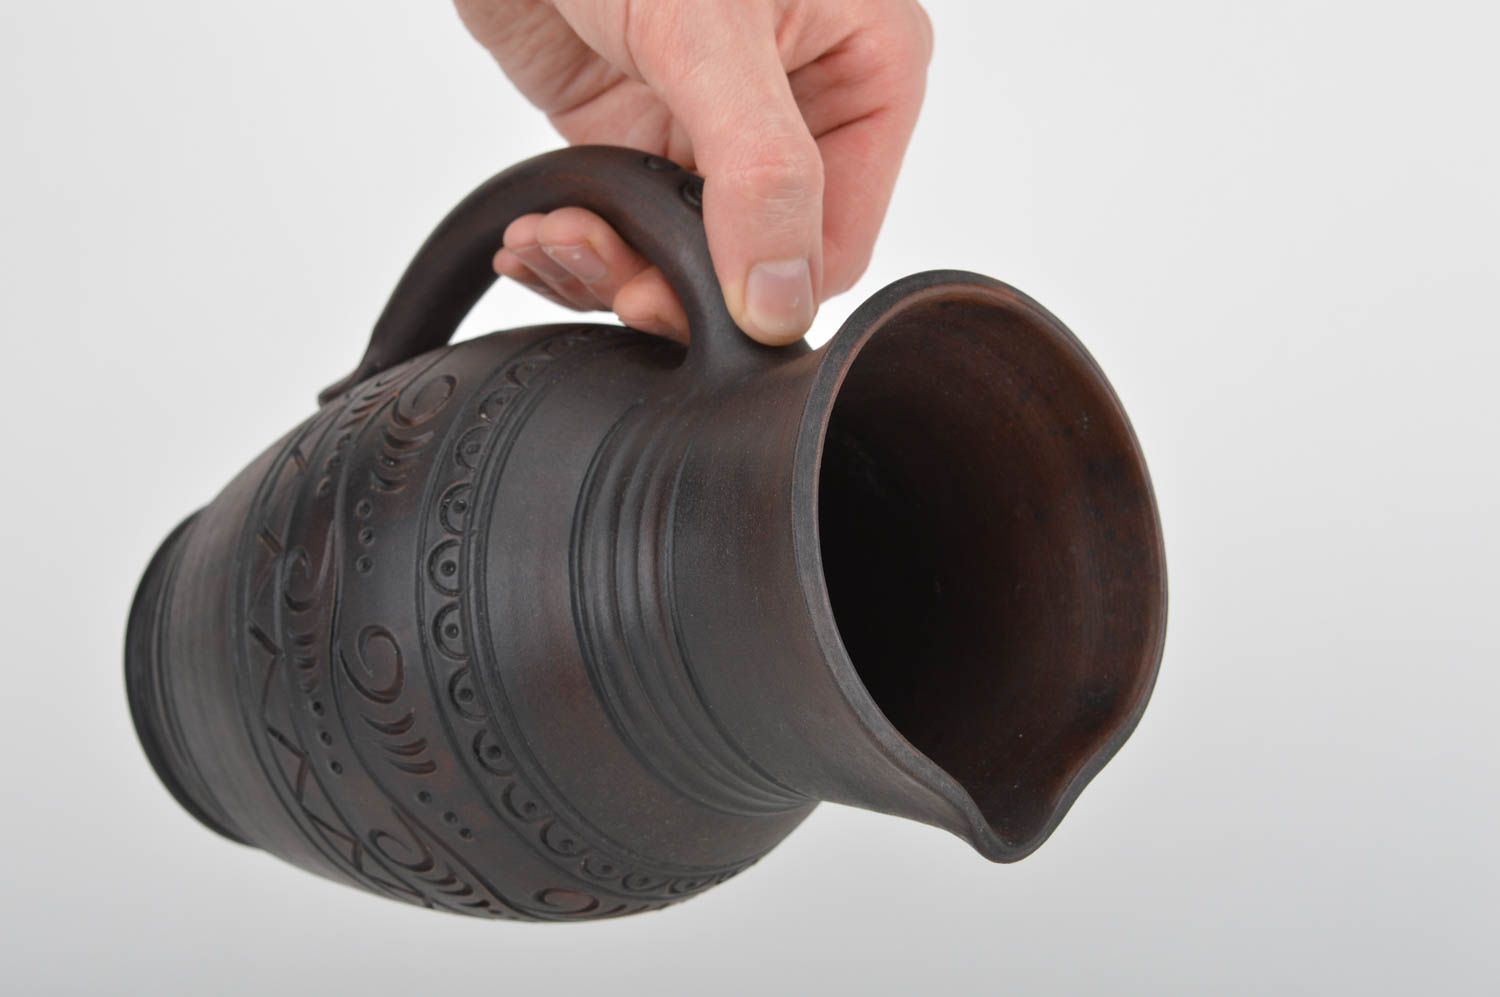 60 oz dark brown ceramic handmade water jug with handle in classic style 2 lb photo 3